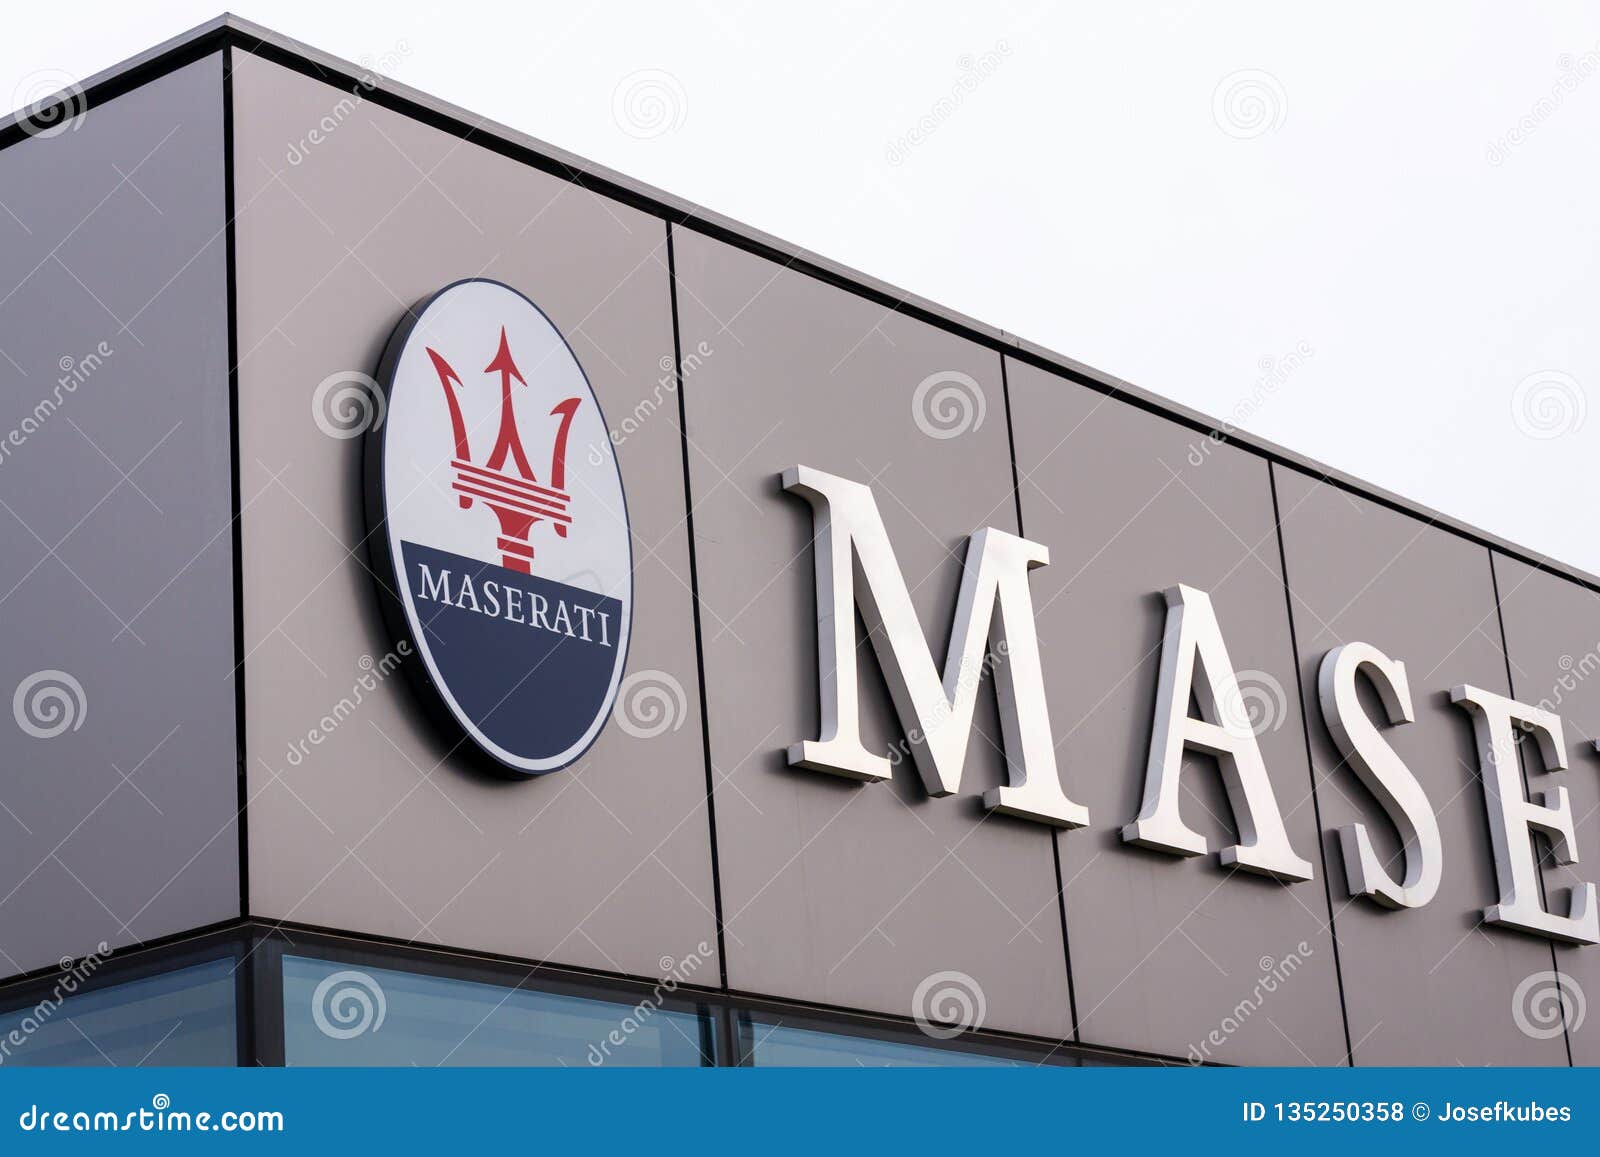 Maserati Italian Luxury Car Manufacturer Company Logo In Front Of